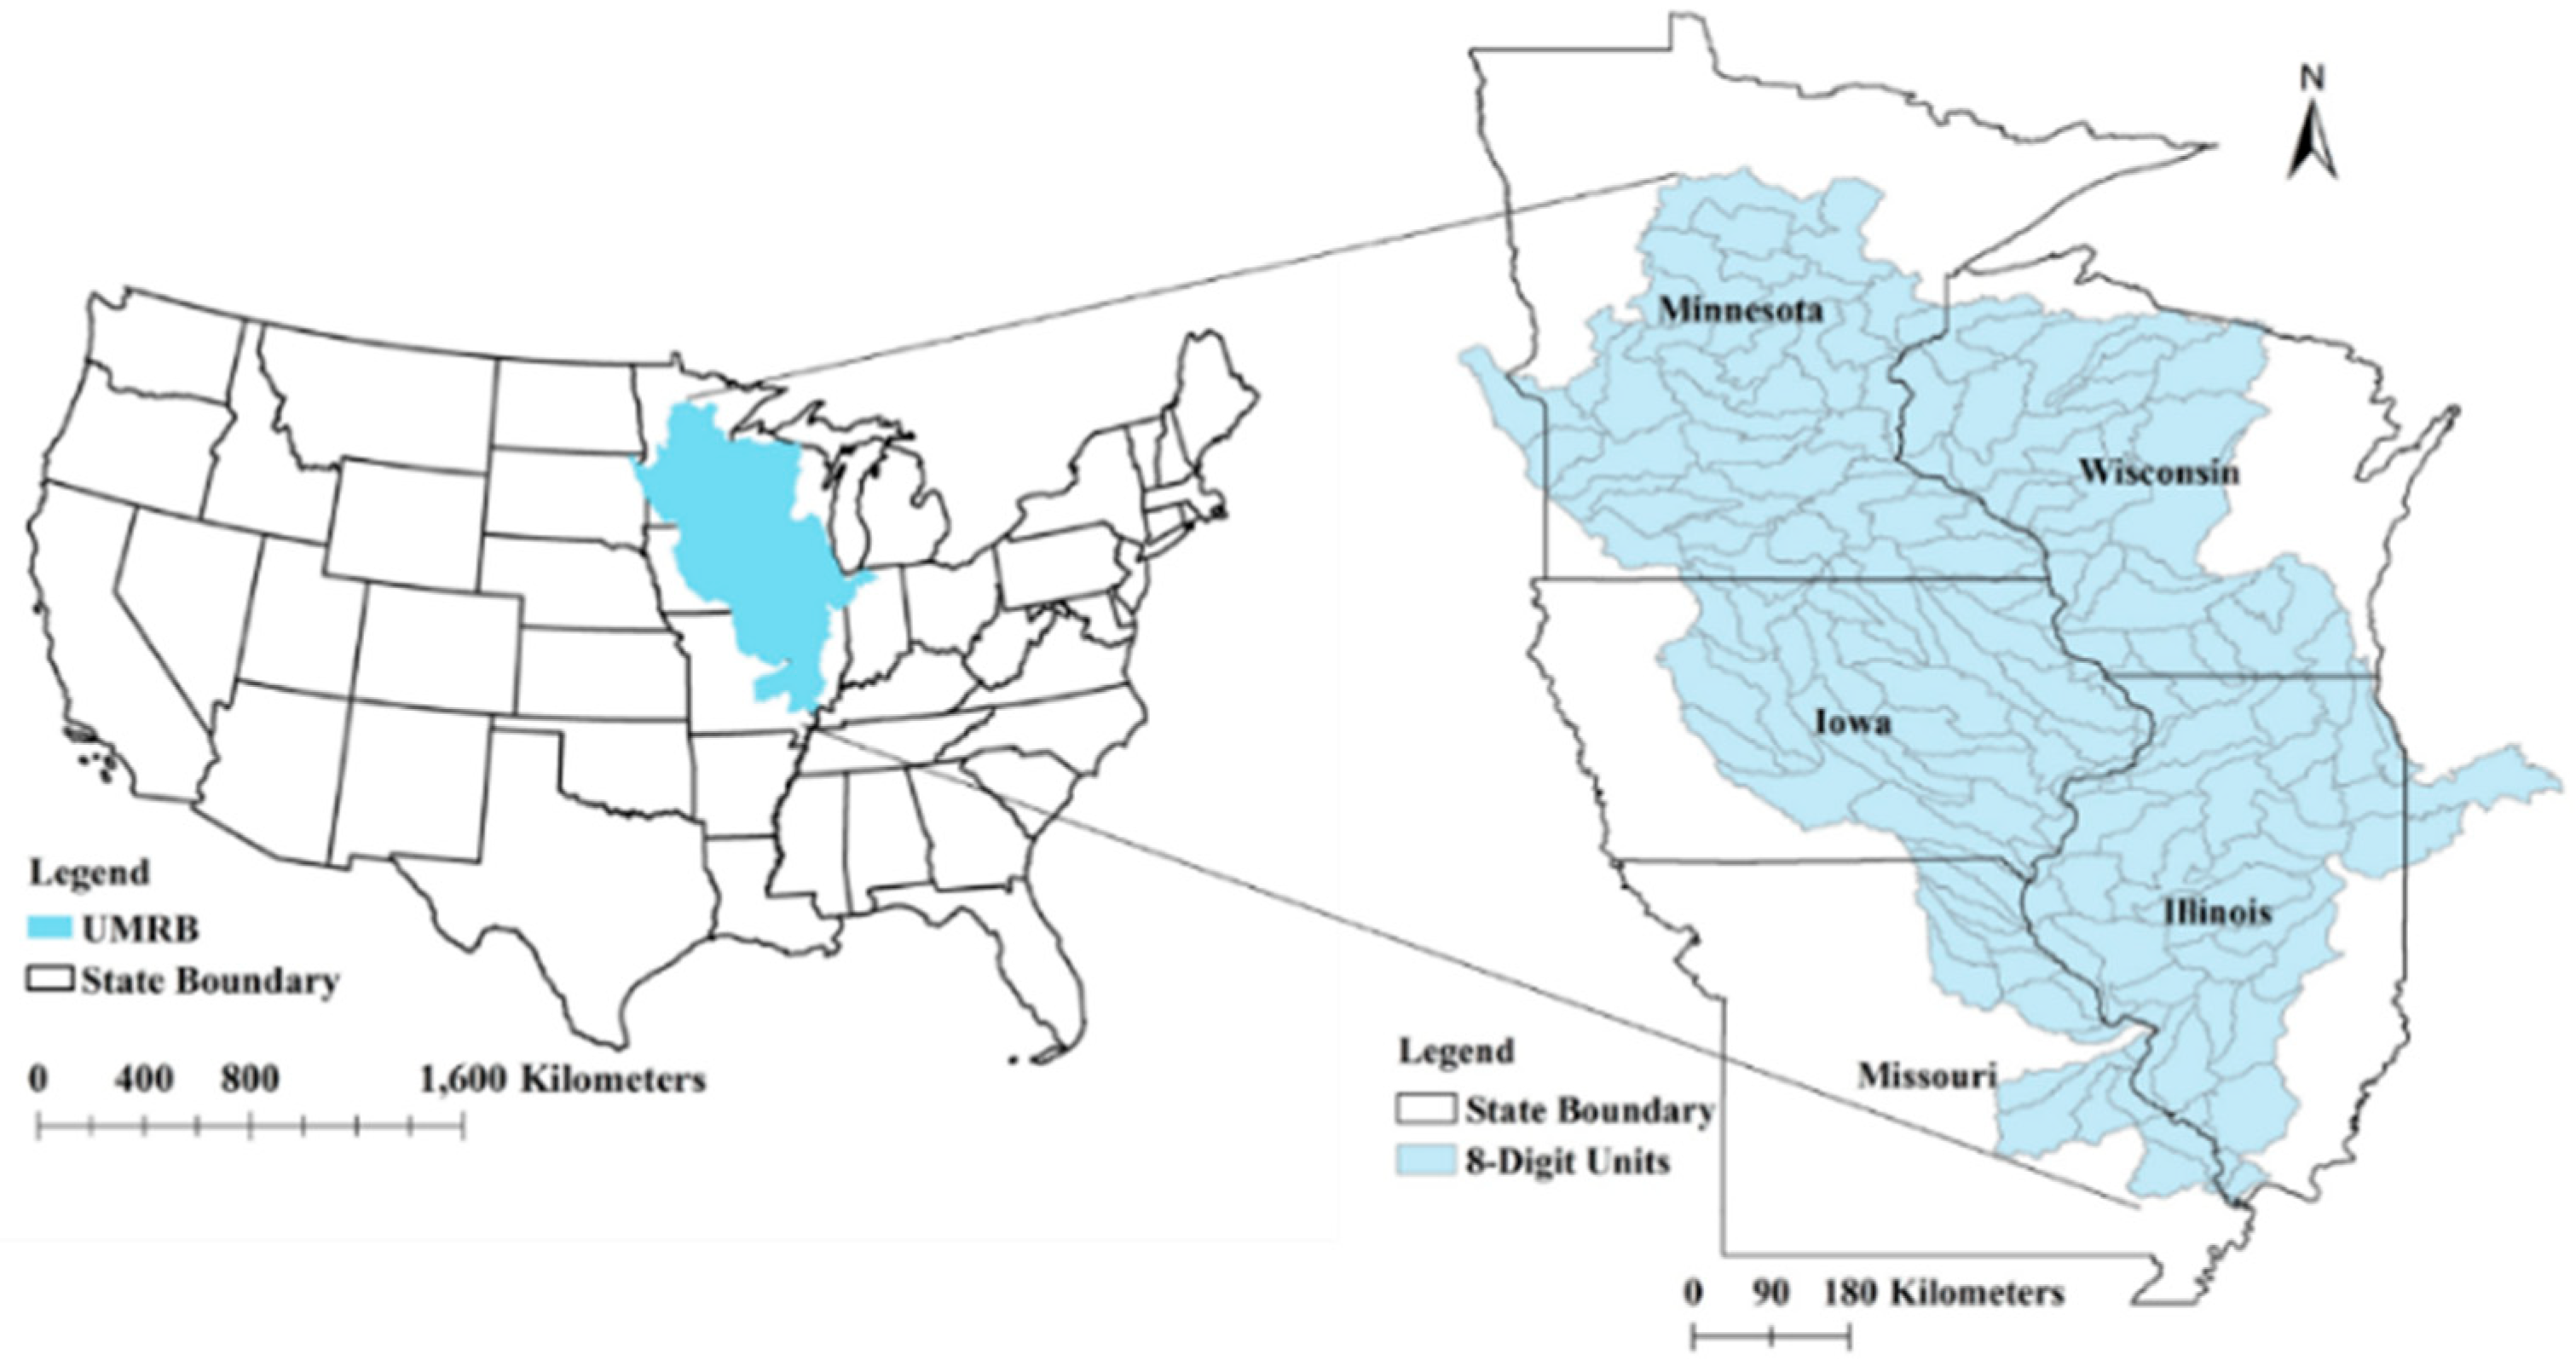 Миссури бассейн какого. Река Миссисипи на карте. Бассейн реки Миссисипи на контурной карте. Бассейн реки Миссисипи на контурной. Бассейн Миссисипи и Миссури.